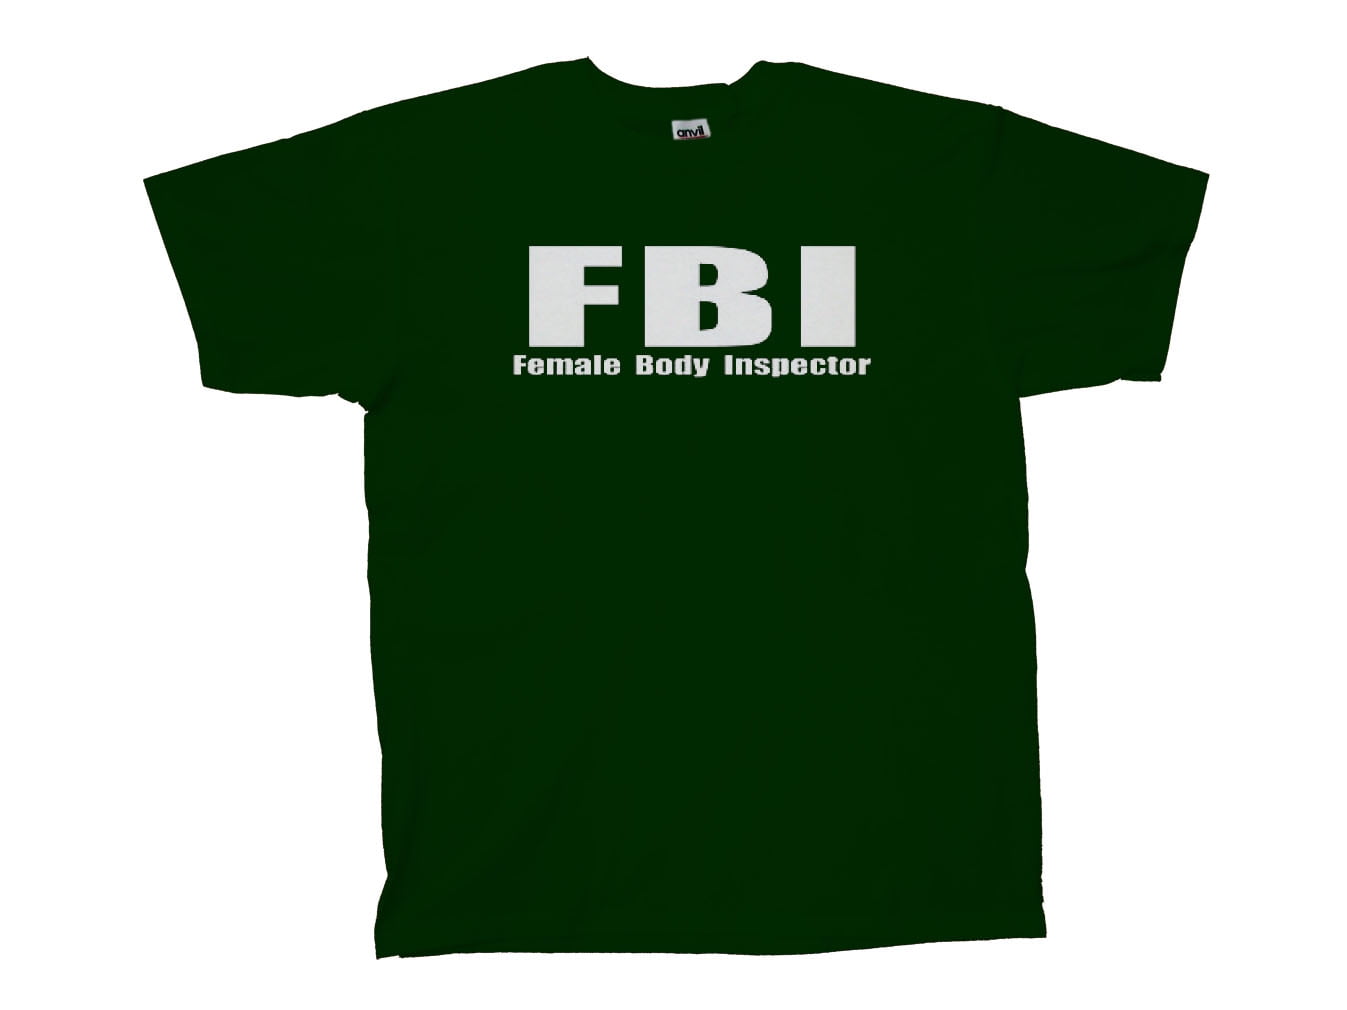 FBI Female Body Inspector Funny Crude Humor Mens Short Sleeve T-shirt-Fg-3X Forest Green pic